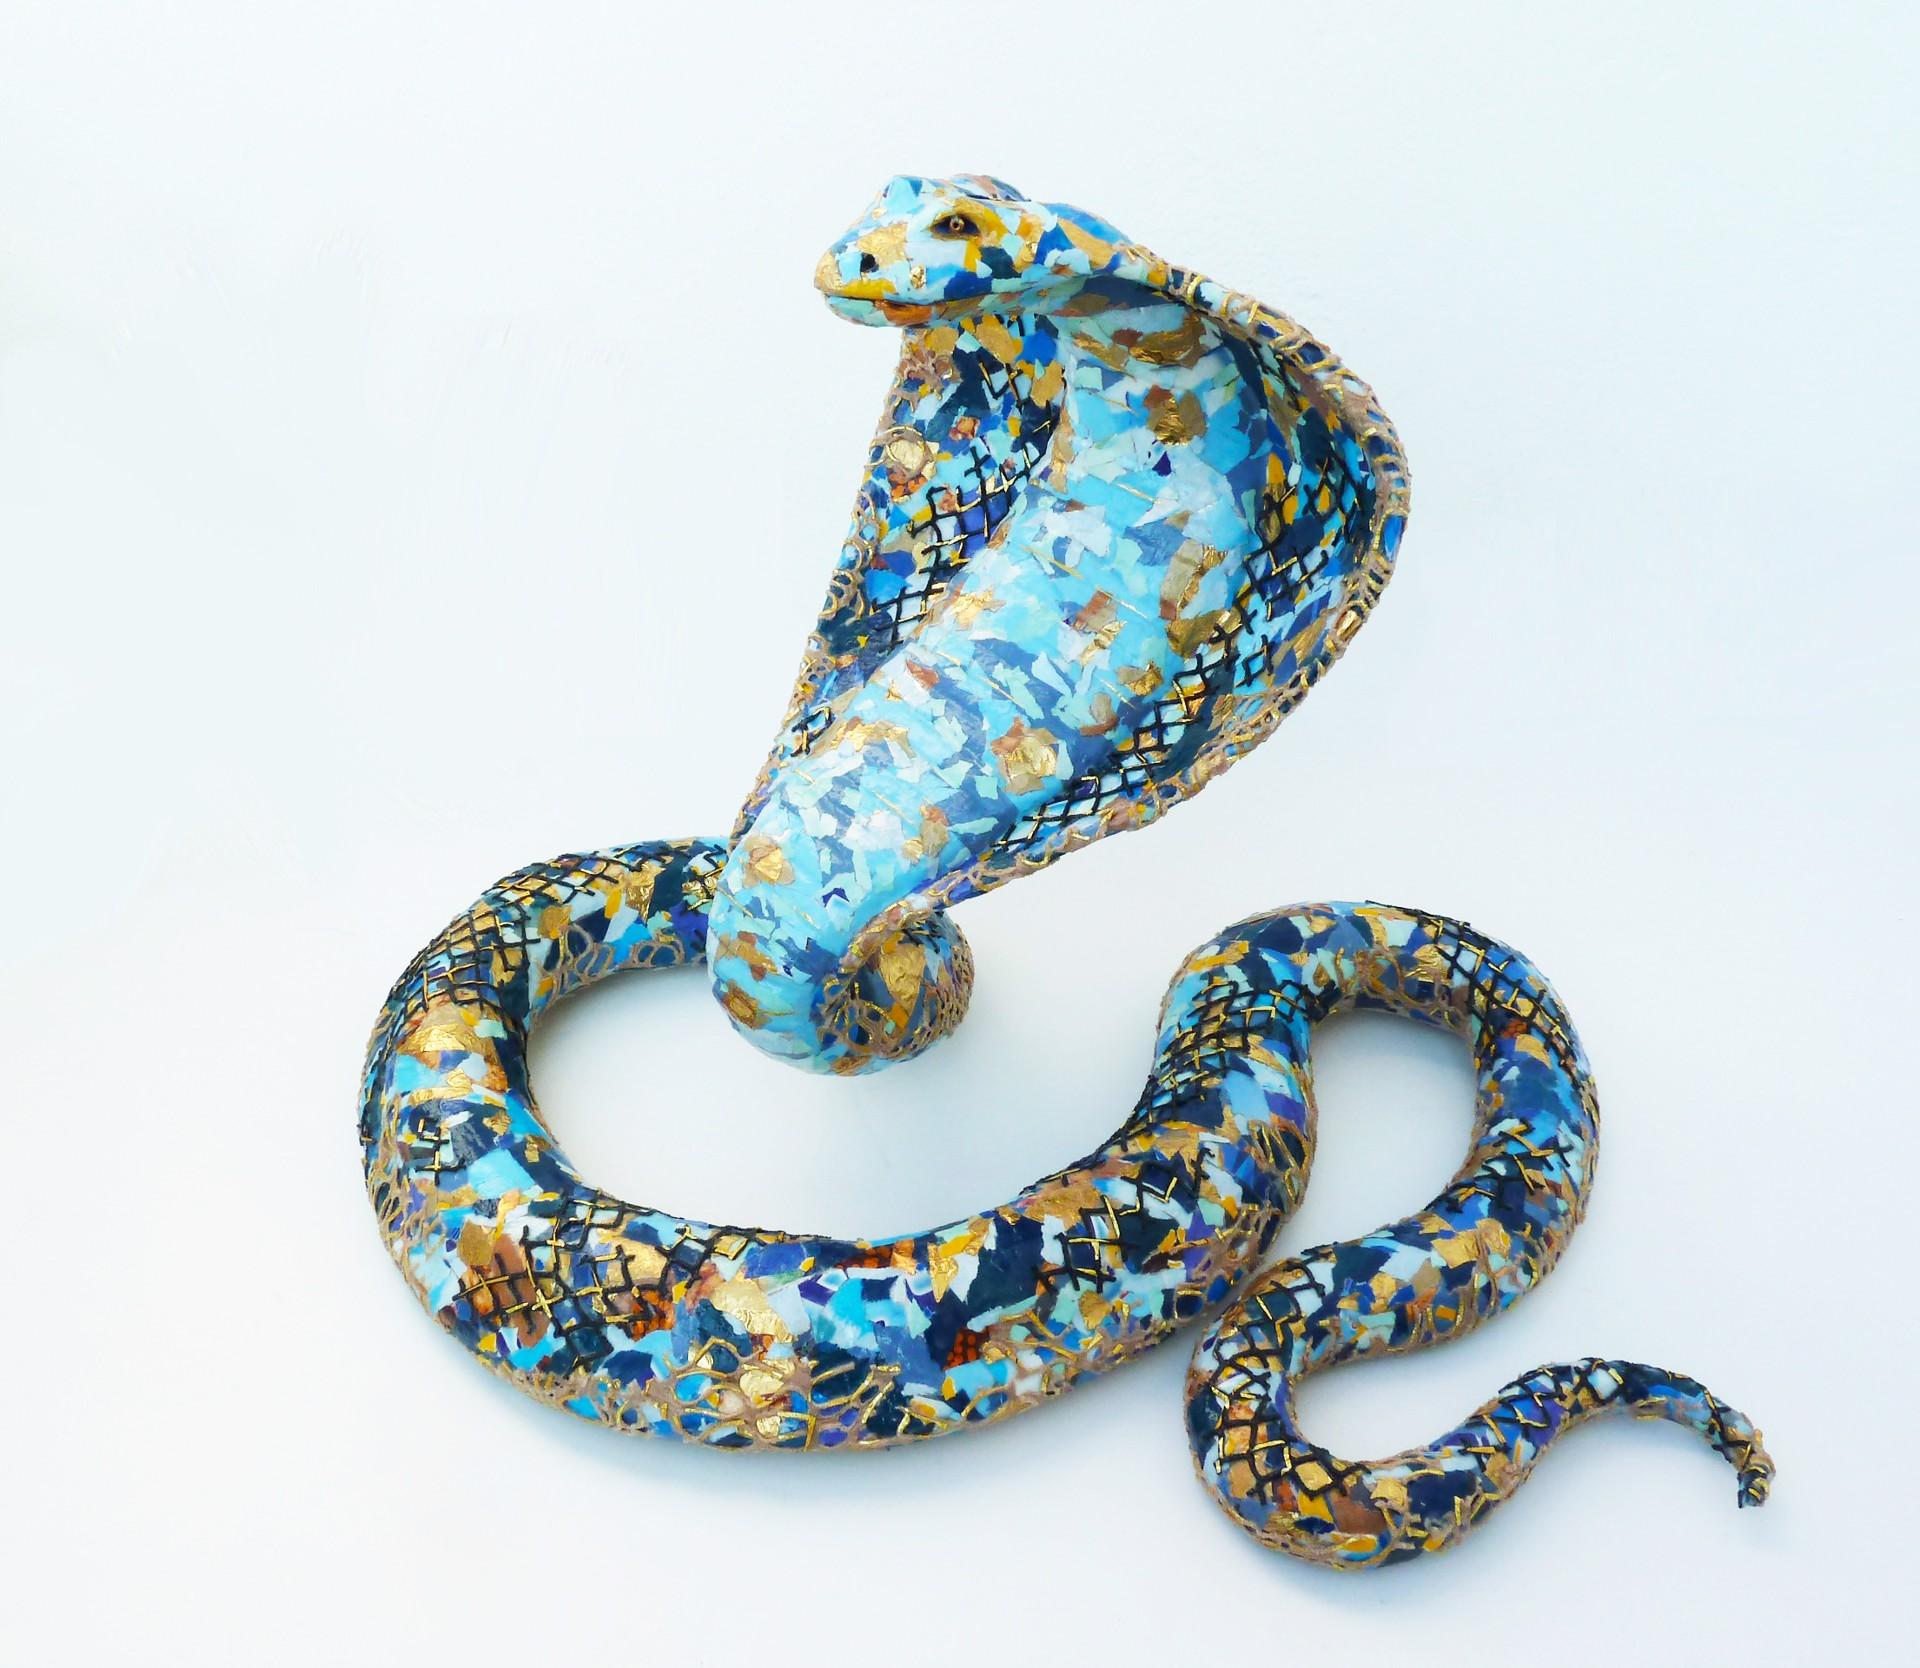 Kara the Cobra - Contemporary Snake Sculpture Upcylced Materials  (Blue + Gold)